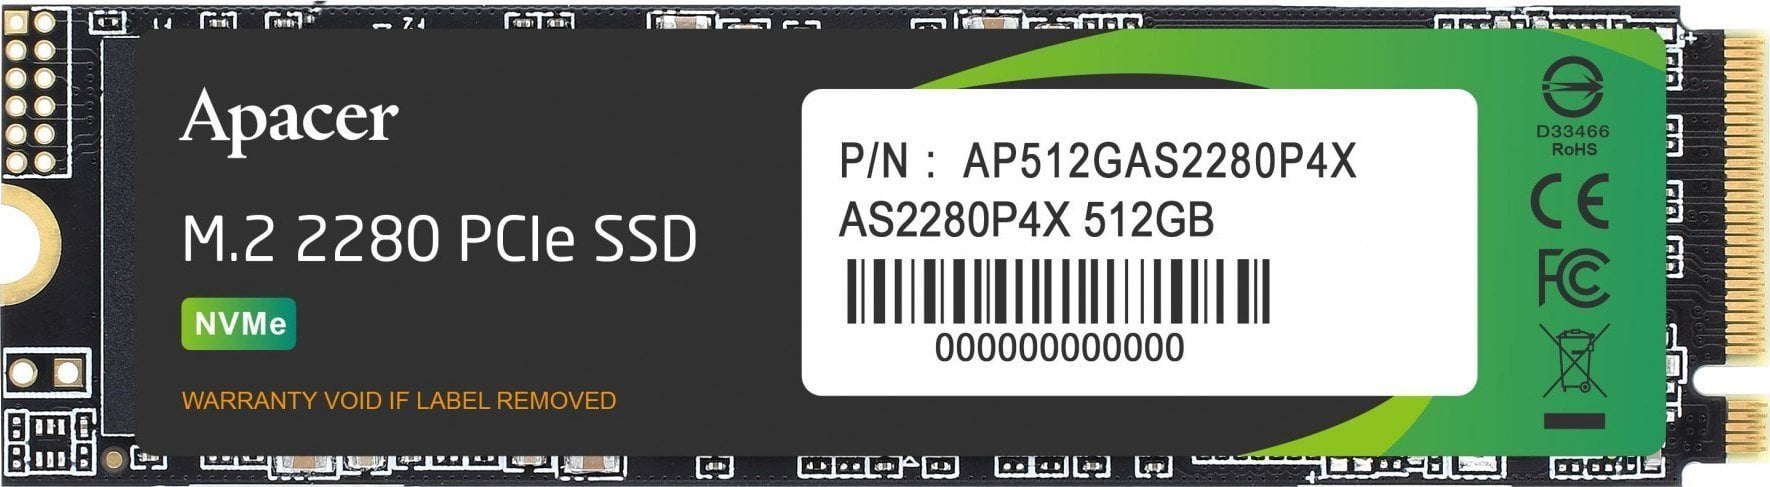 Apacer SSD Apacer AS2280P4X 512GB M.2 PCIe NVMe Gen3 x4 2280 SSD (2100/1700MB/s)